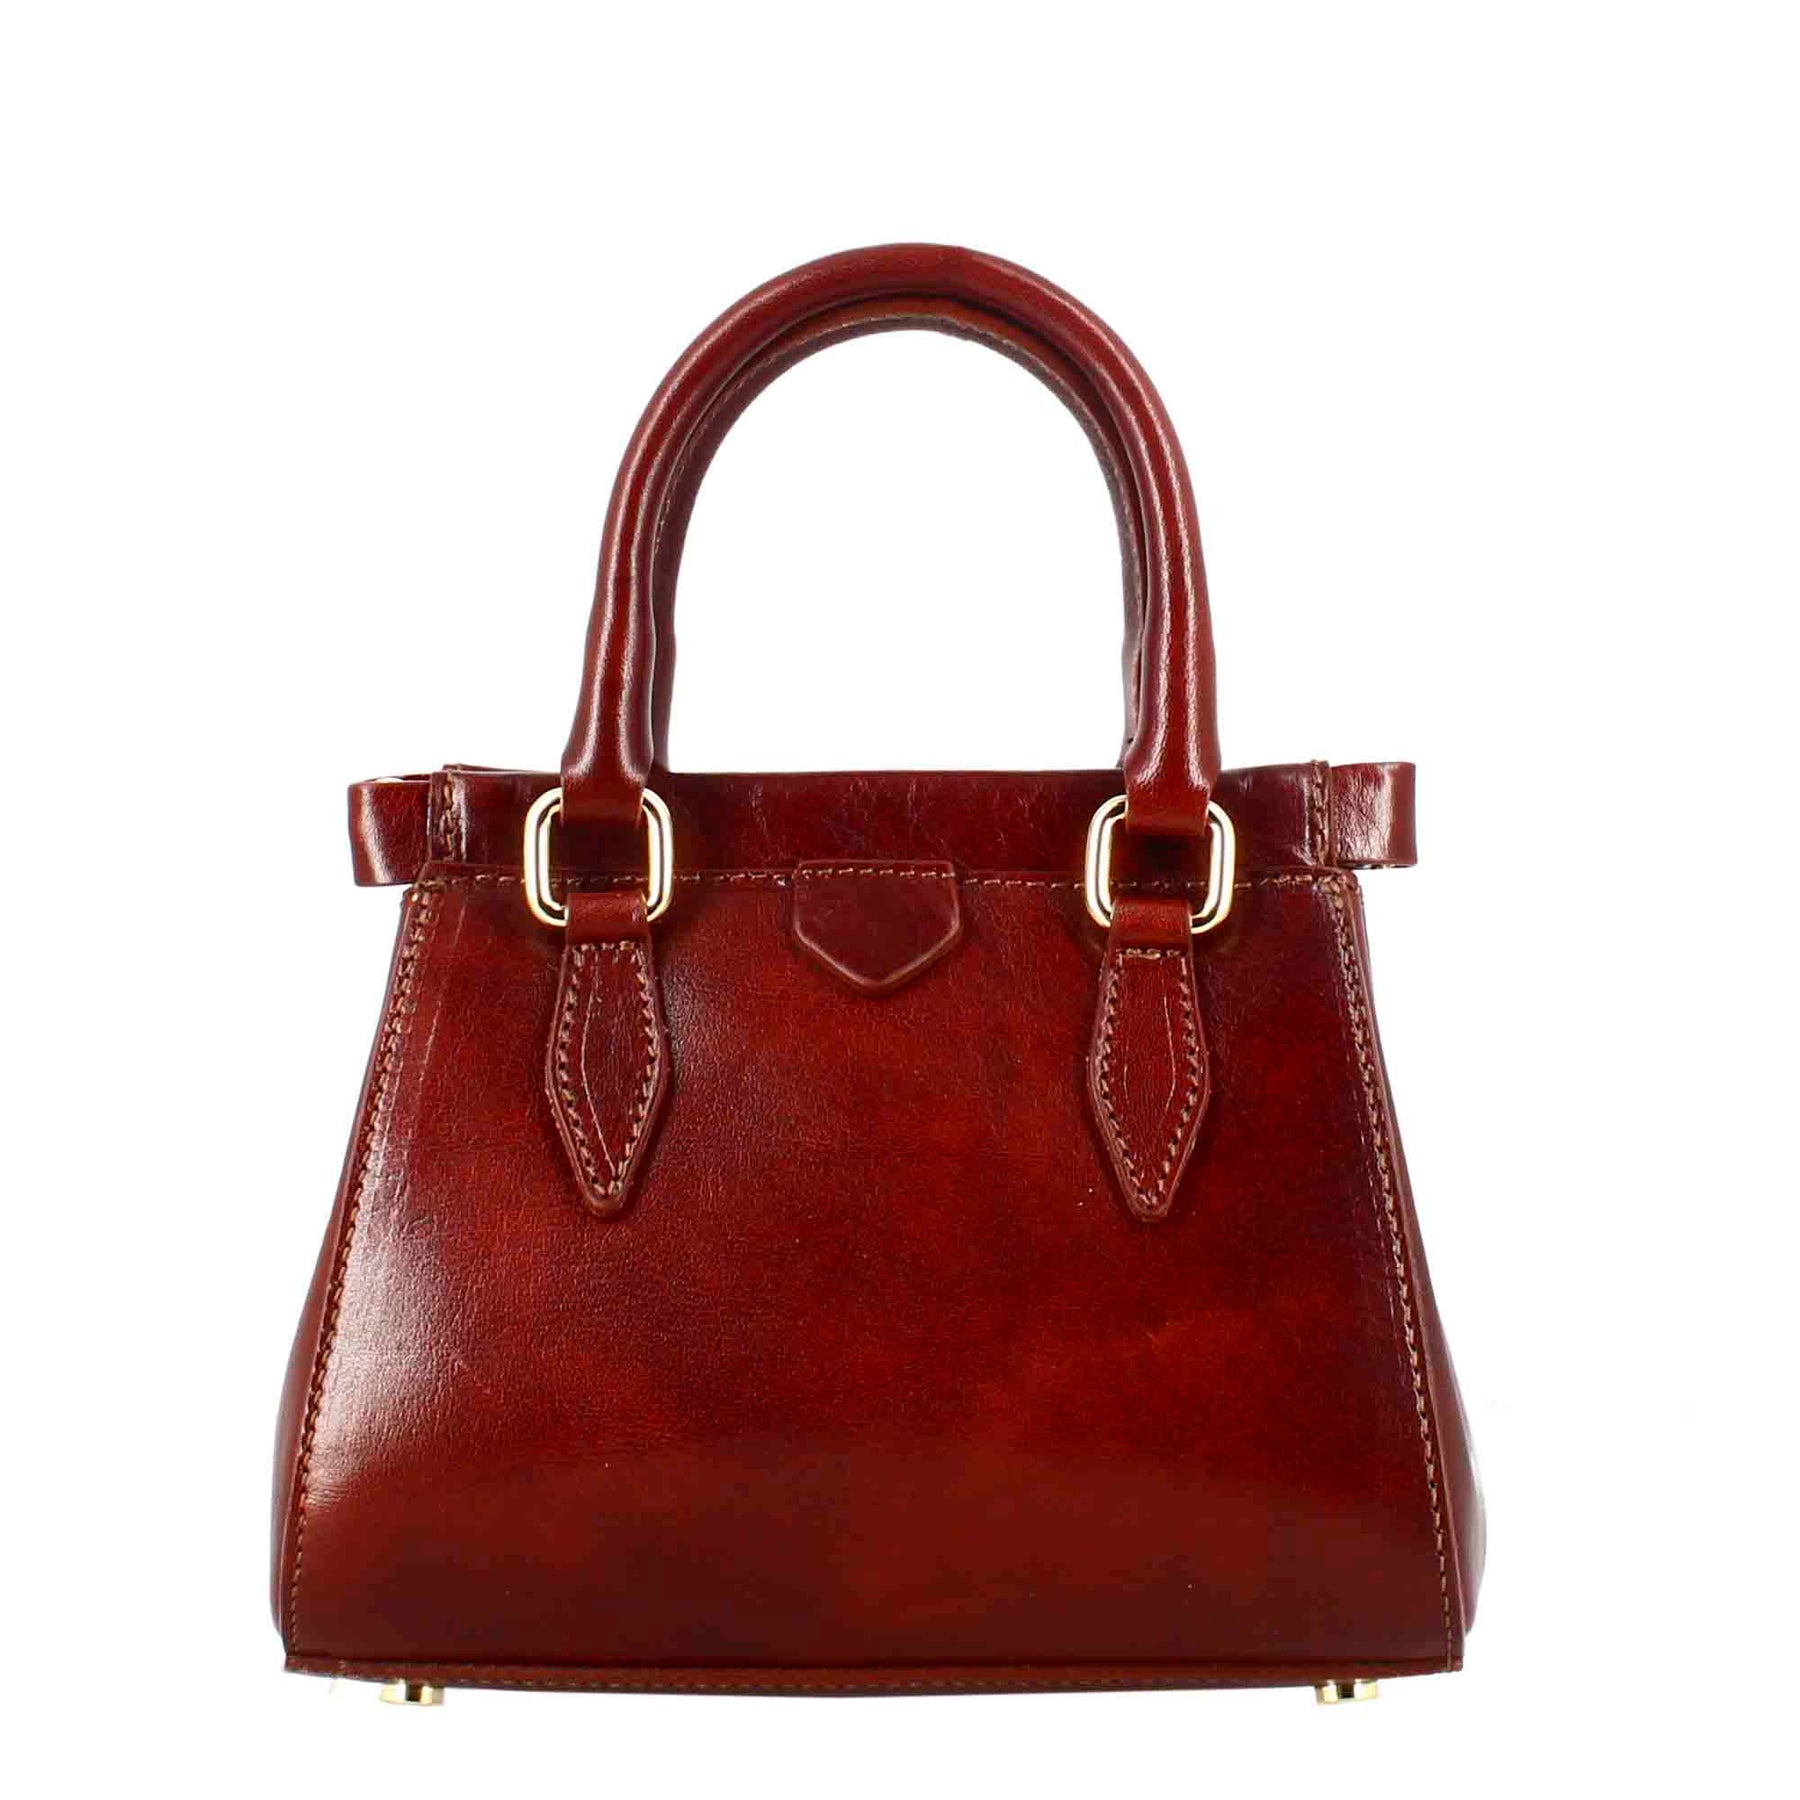 Fiorenza leather handbag with removable brown shoulder strap